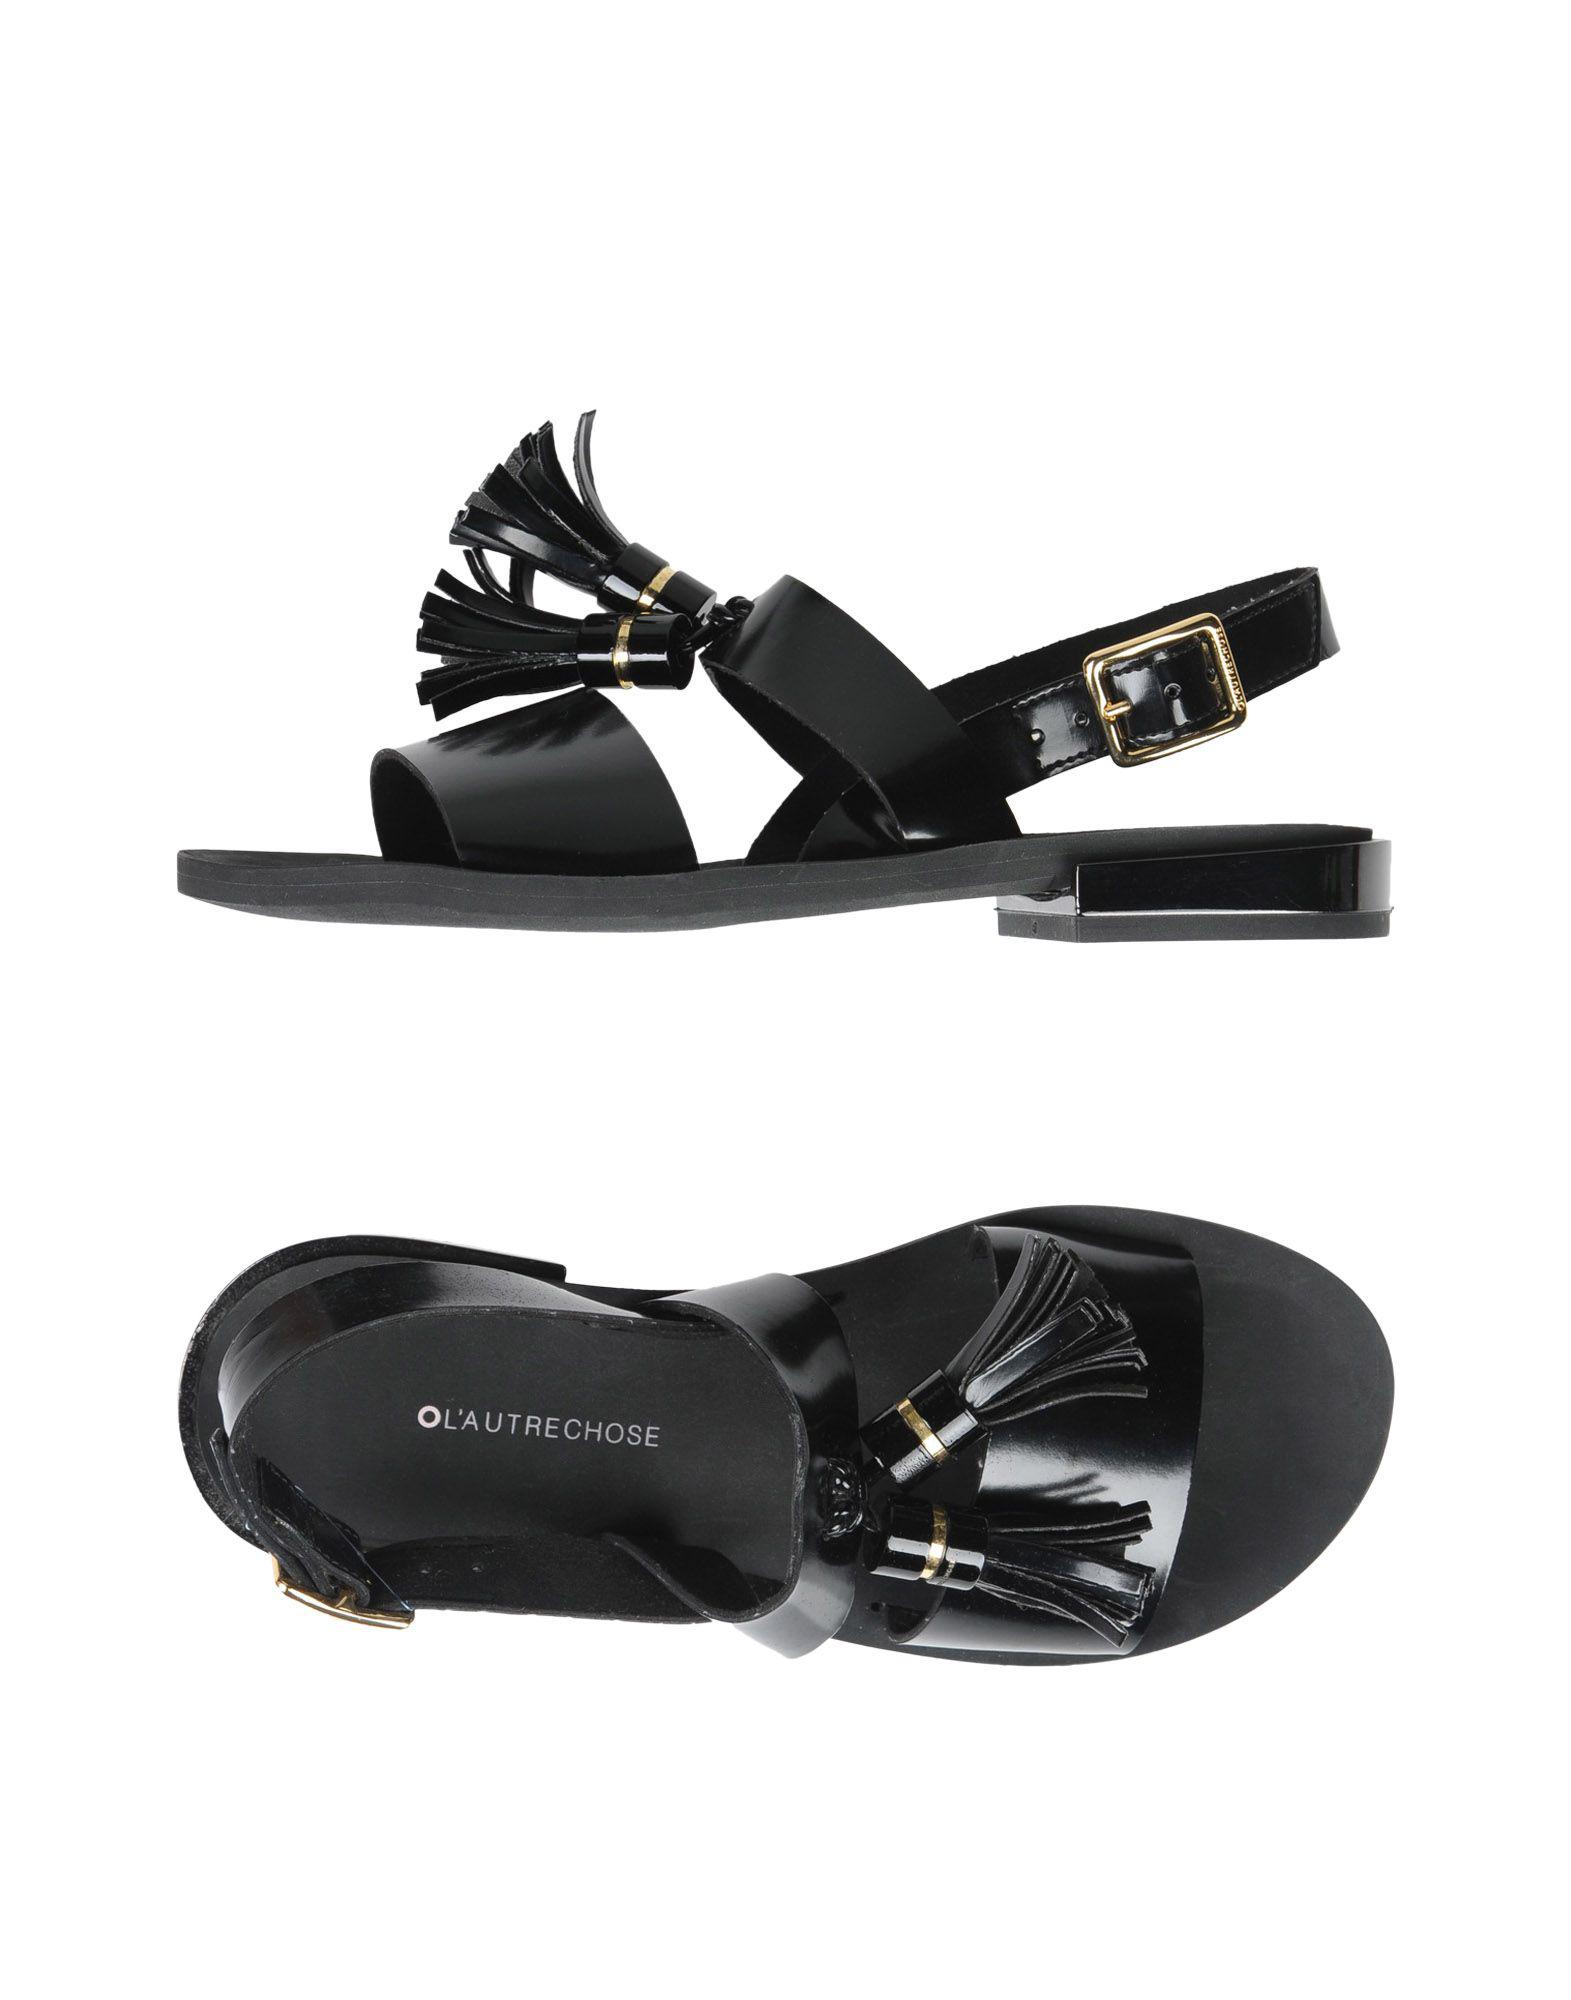 L'Autre Chose Leather Sandals in Black - Save 41% - Lyst